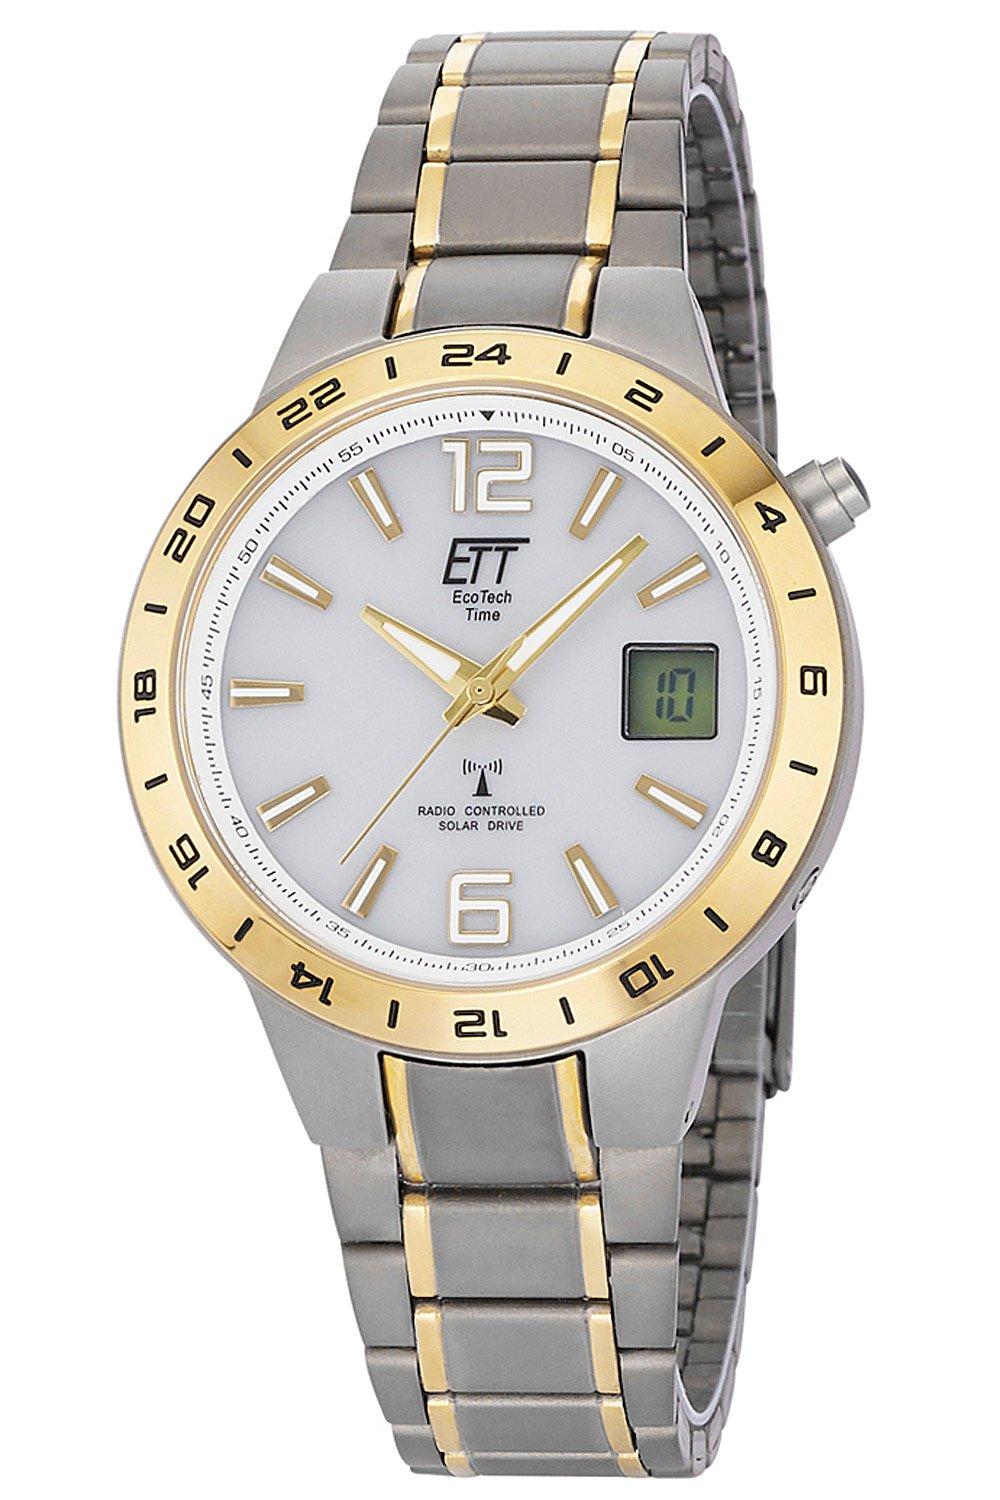 ETT Eco Tech Time Radio-Controlled Solar Watch Titanium Two-Colour EGT-11410-40M  • uhrcenter